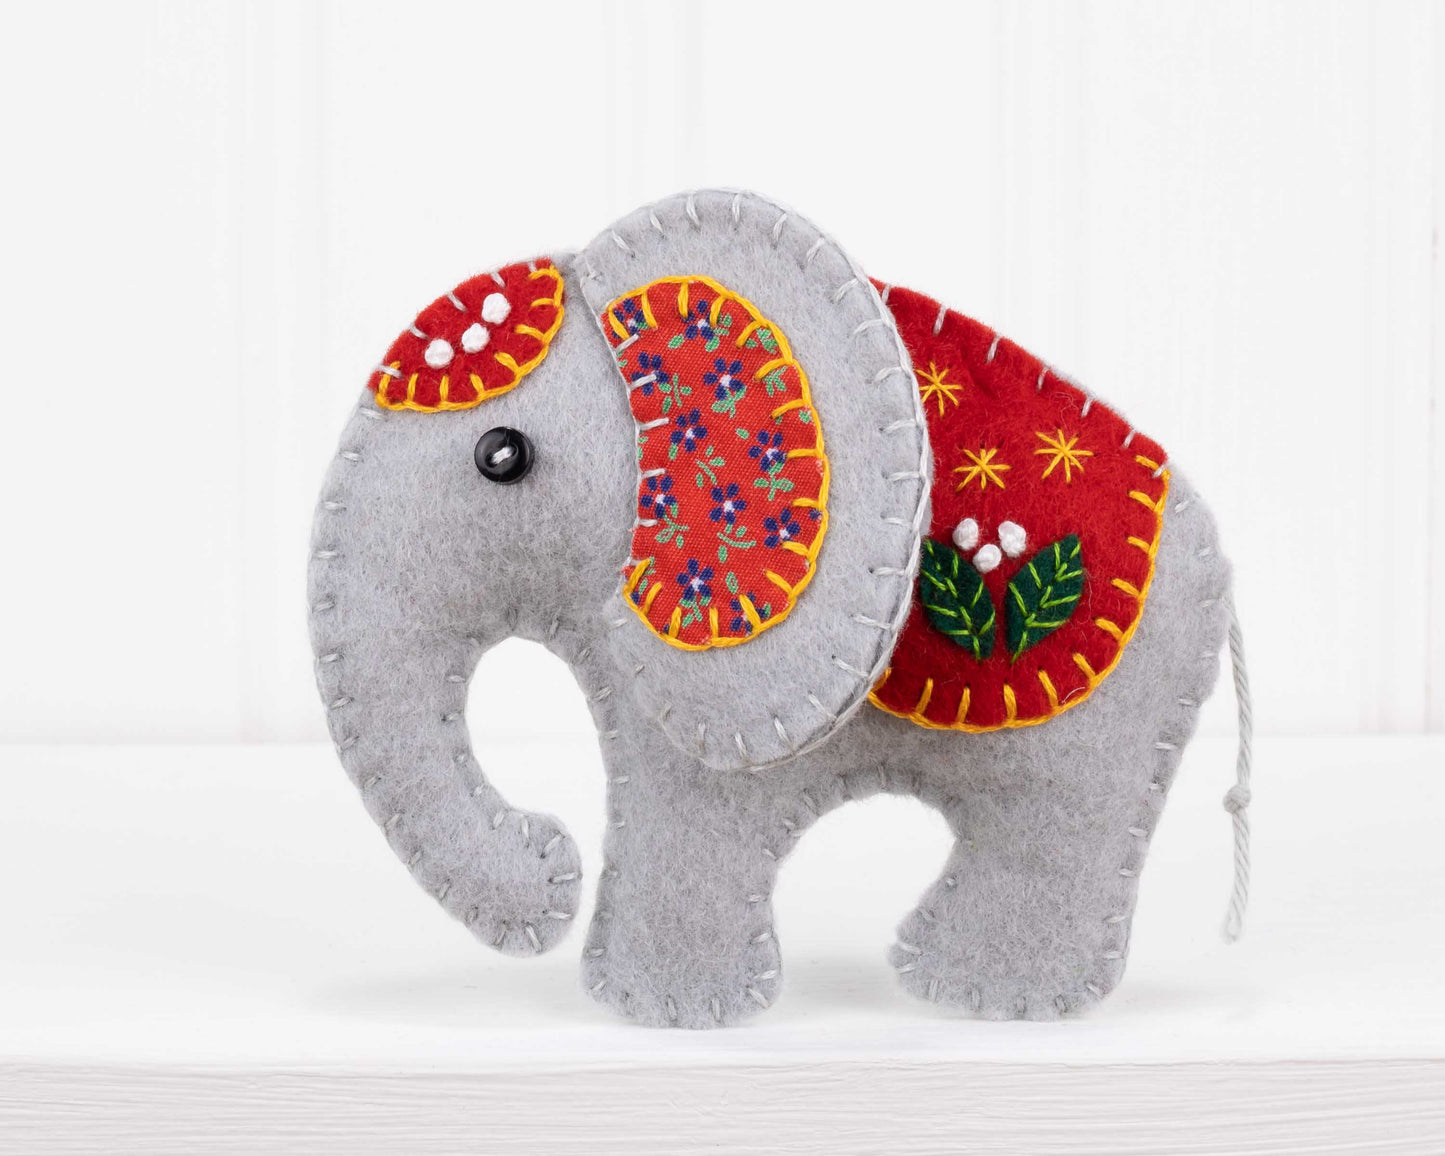 Felt elephant ornament PDF sewing pattern